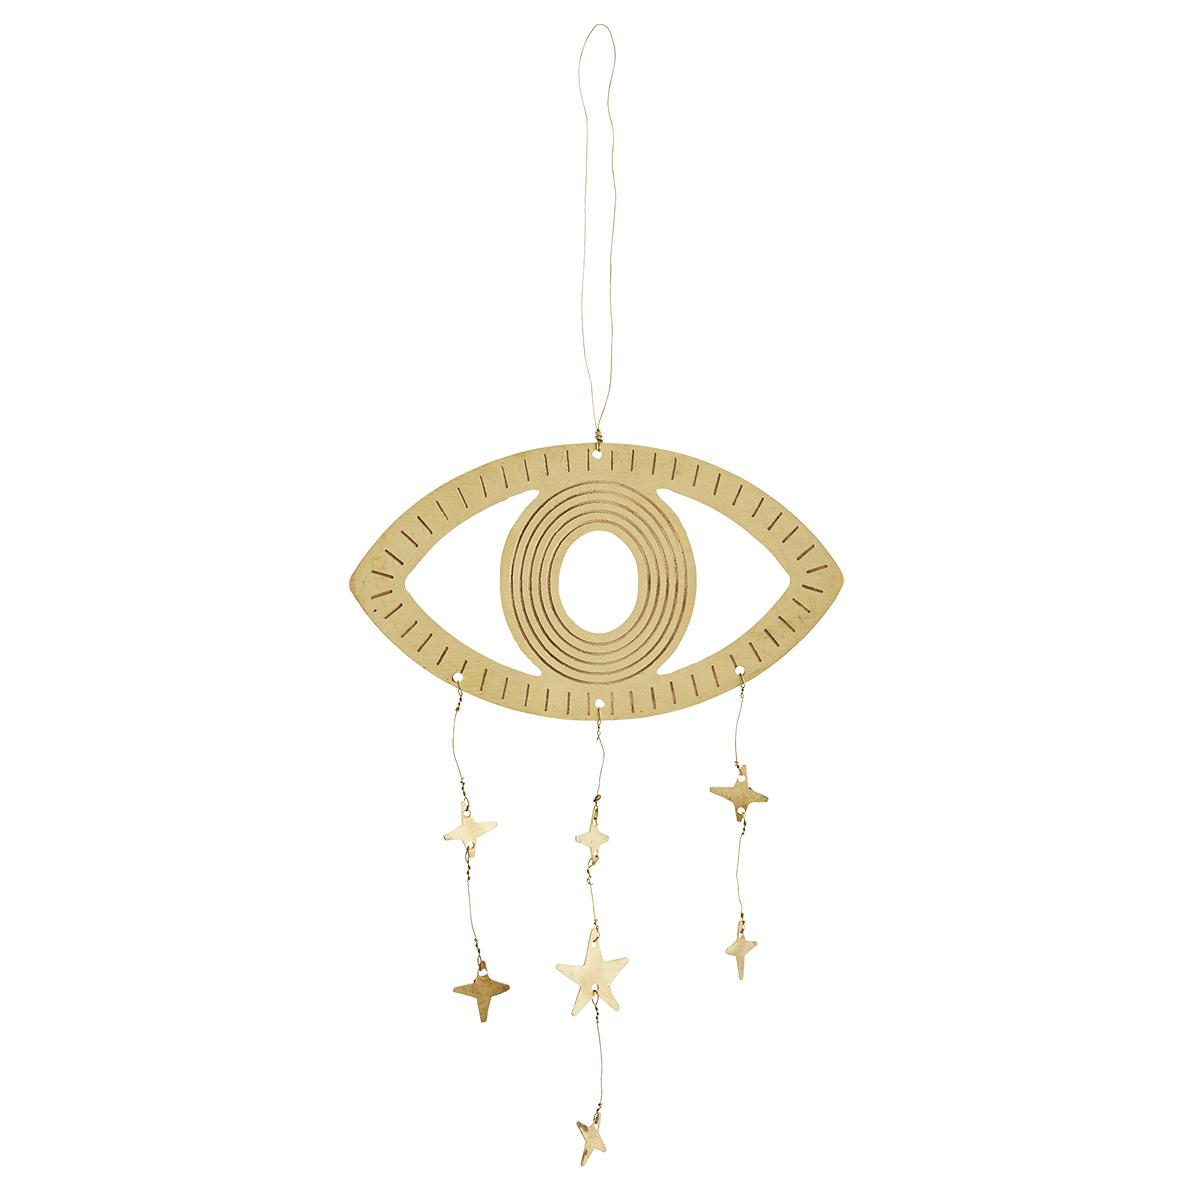 Hanging eye ornament w/ stars